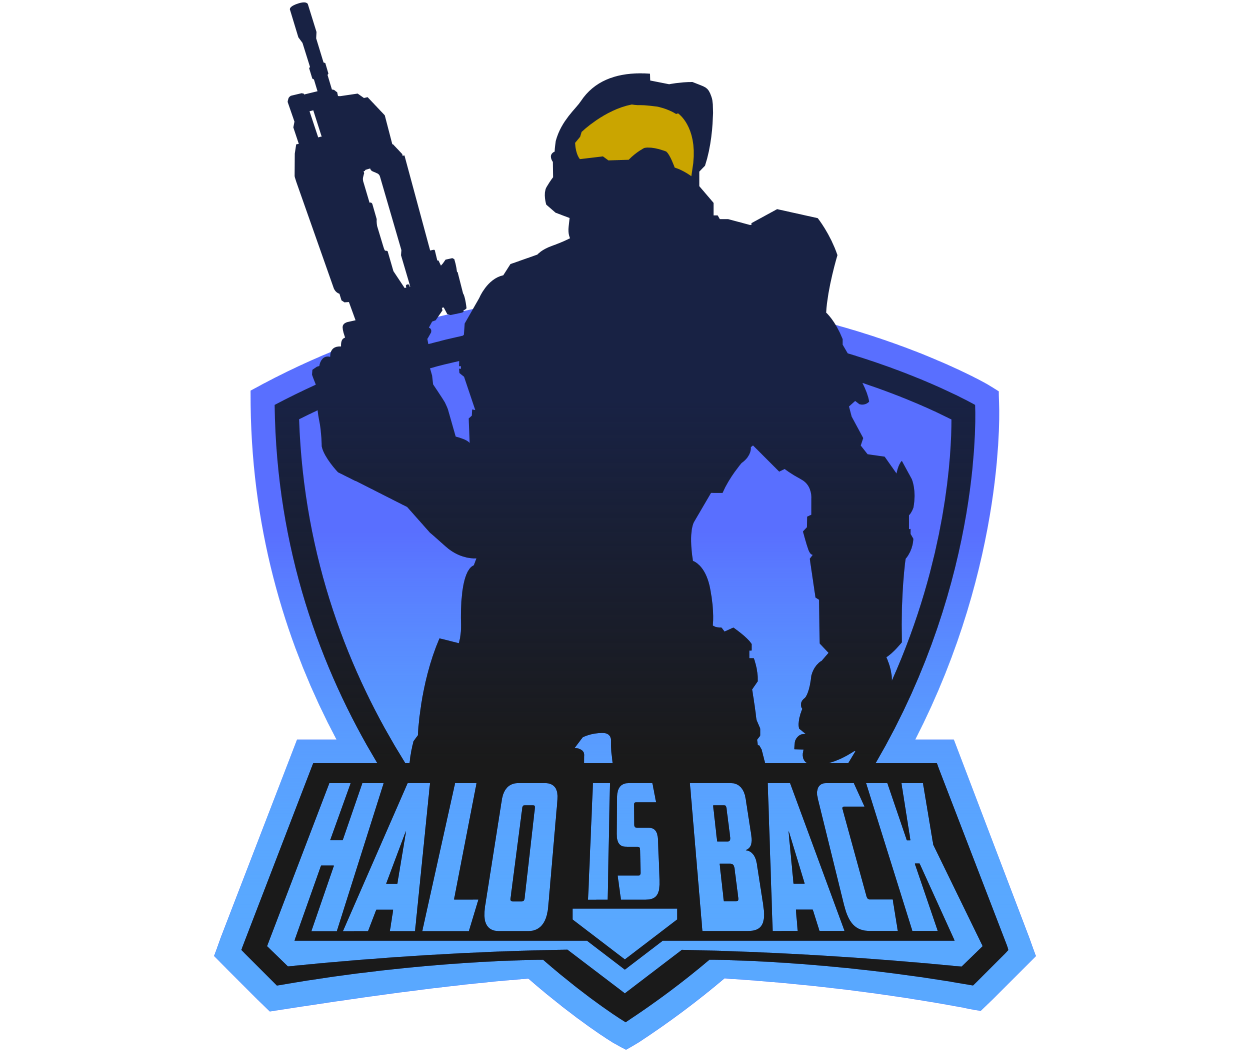 HaloisBack,  LLC. logo